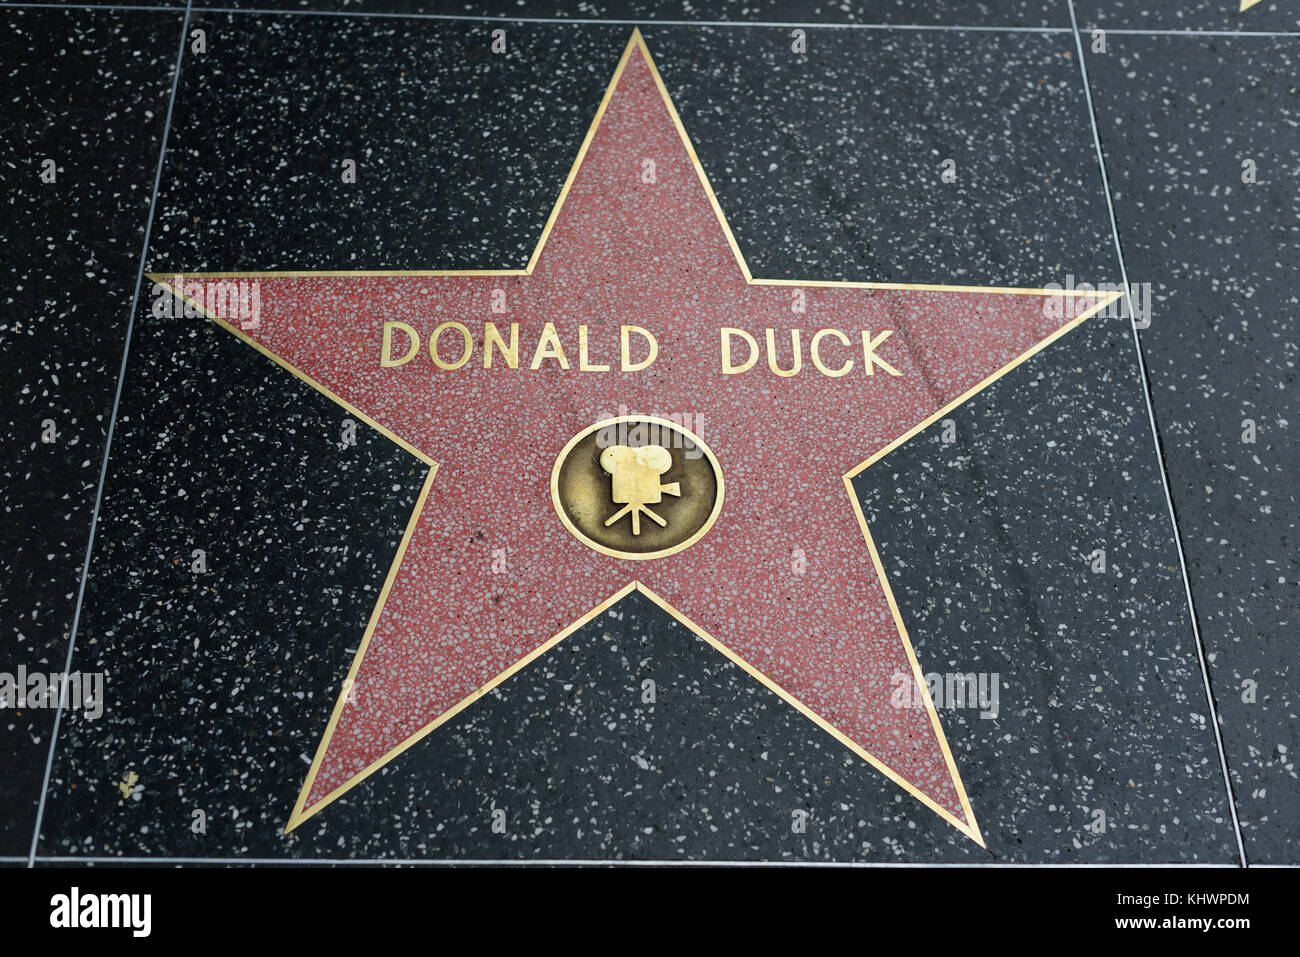 HOLLYWOOD, CA - DEZEMBER 06: Donald Duck Star auf dem Hollywood Walk of Fame in Hollywood, Kalifornien am 6. Dezember 2016. Stockfoto